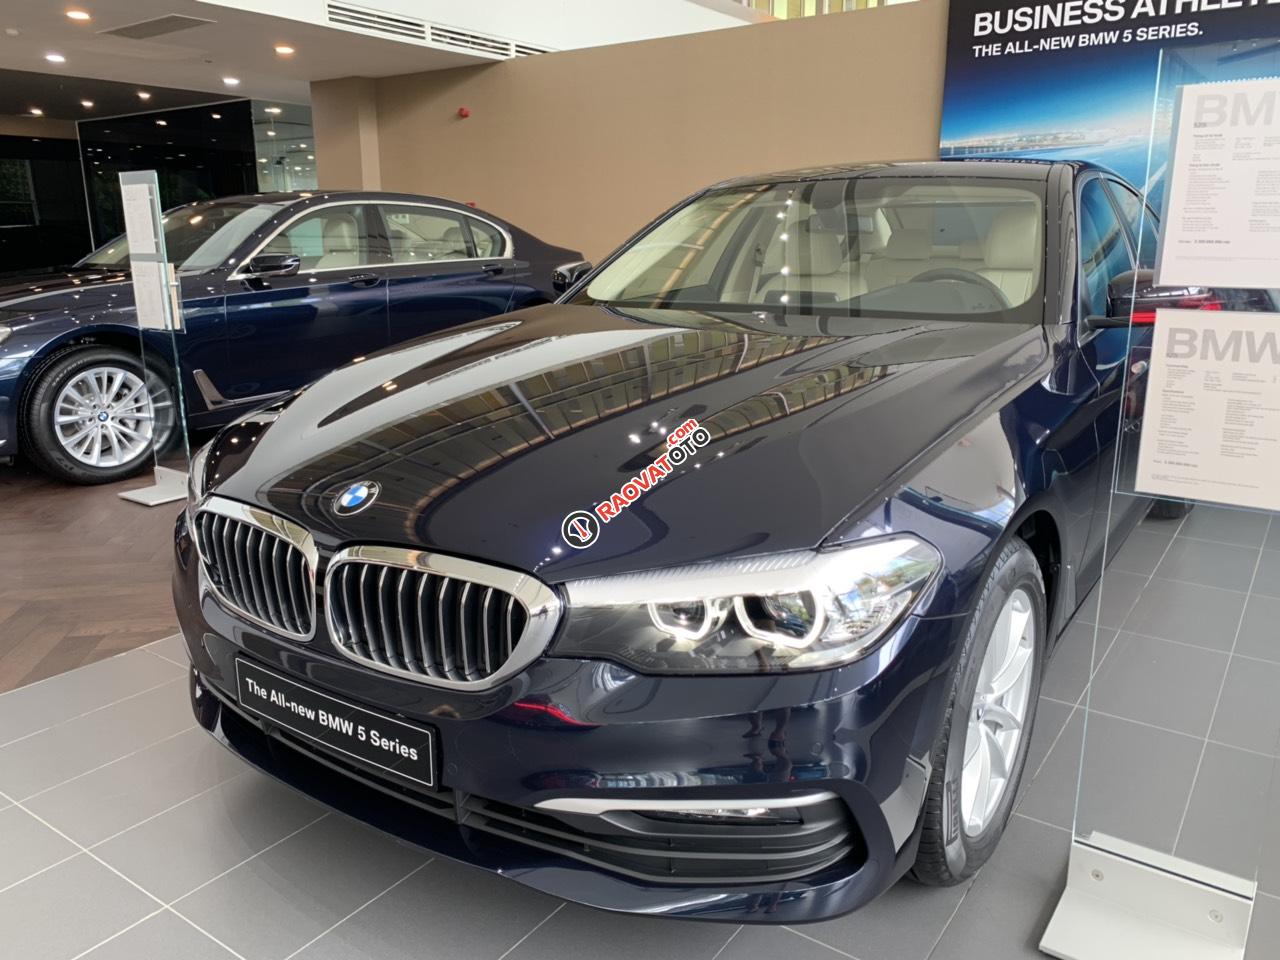 [BMW Quận 2] BMW 520i All new, giảm tiền mặt, bảo hiểm vật chất, bảo dưỡng. Hotline PKD 0908 526 727-0